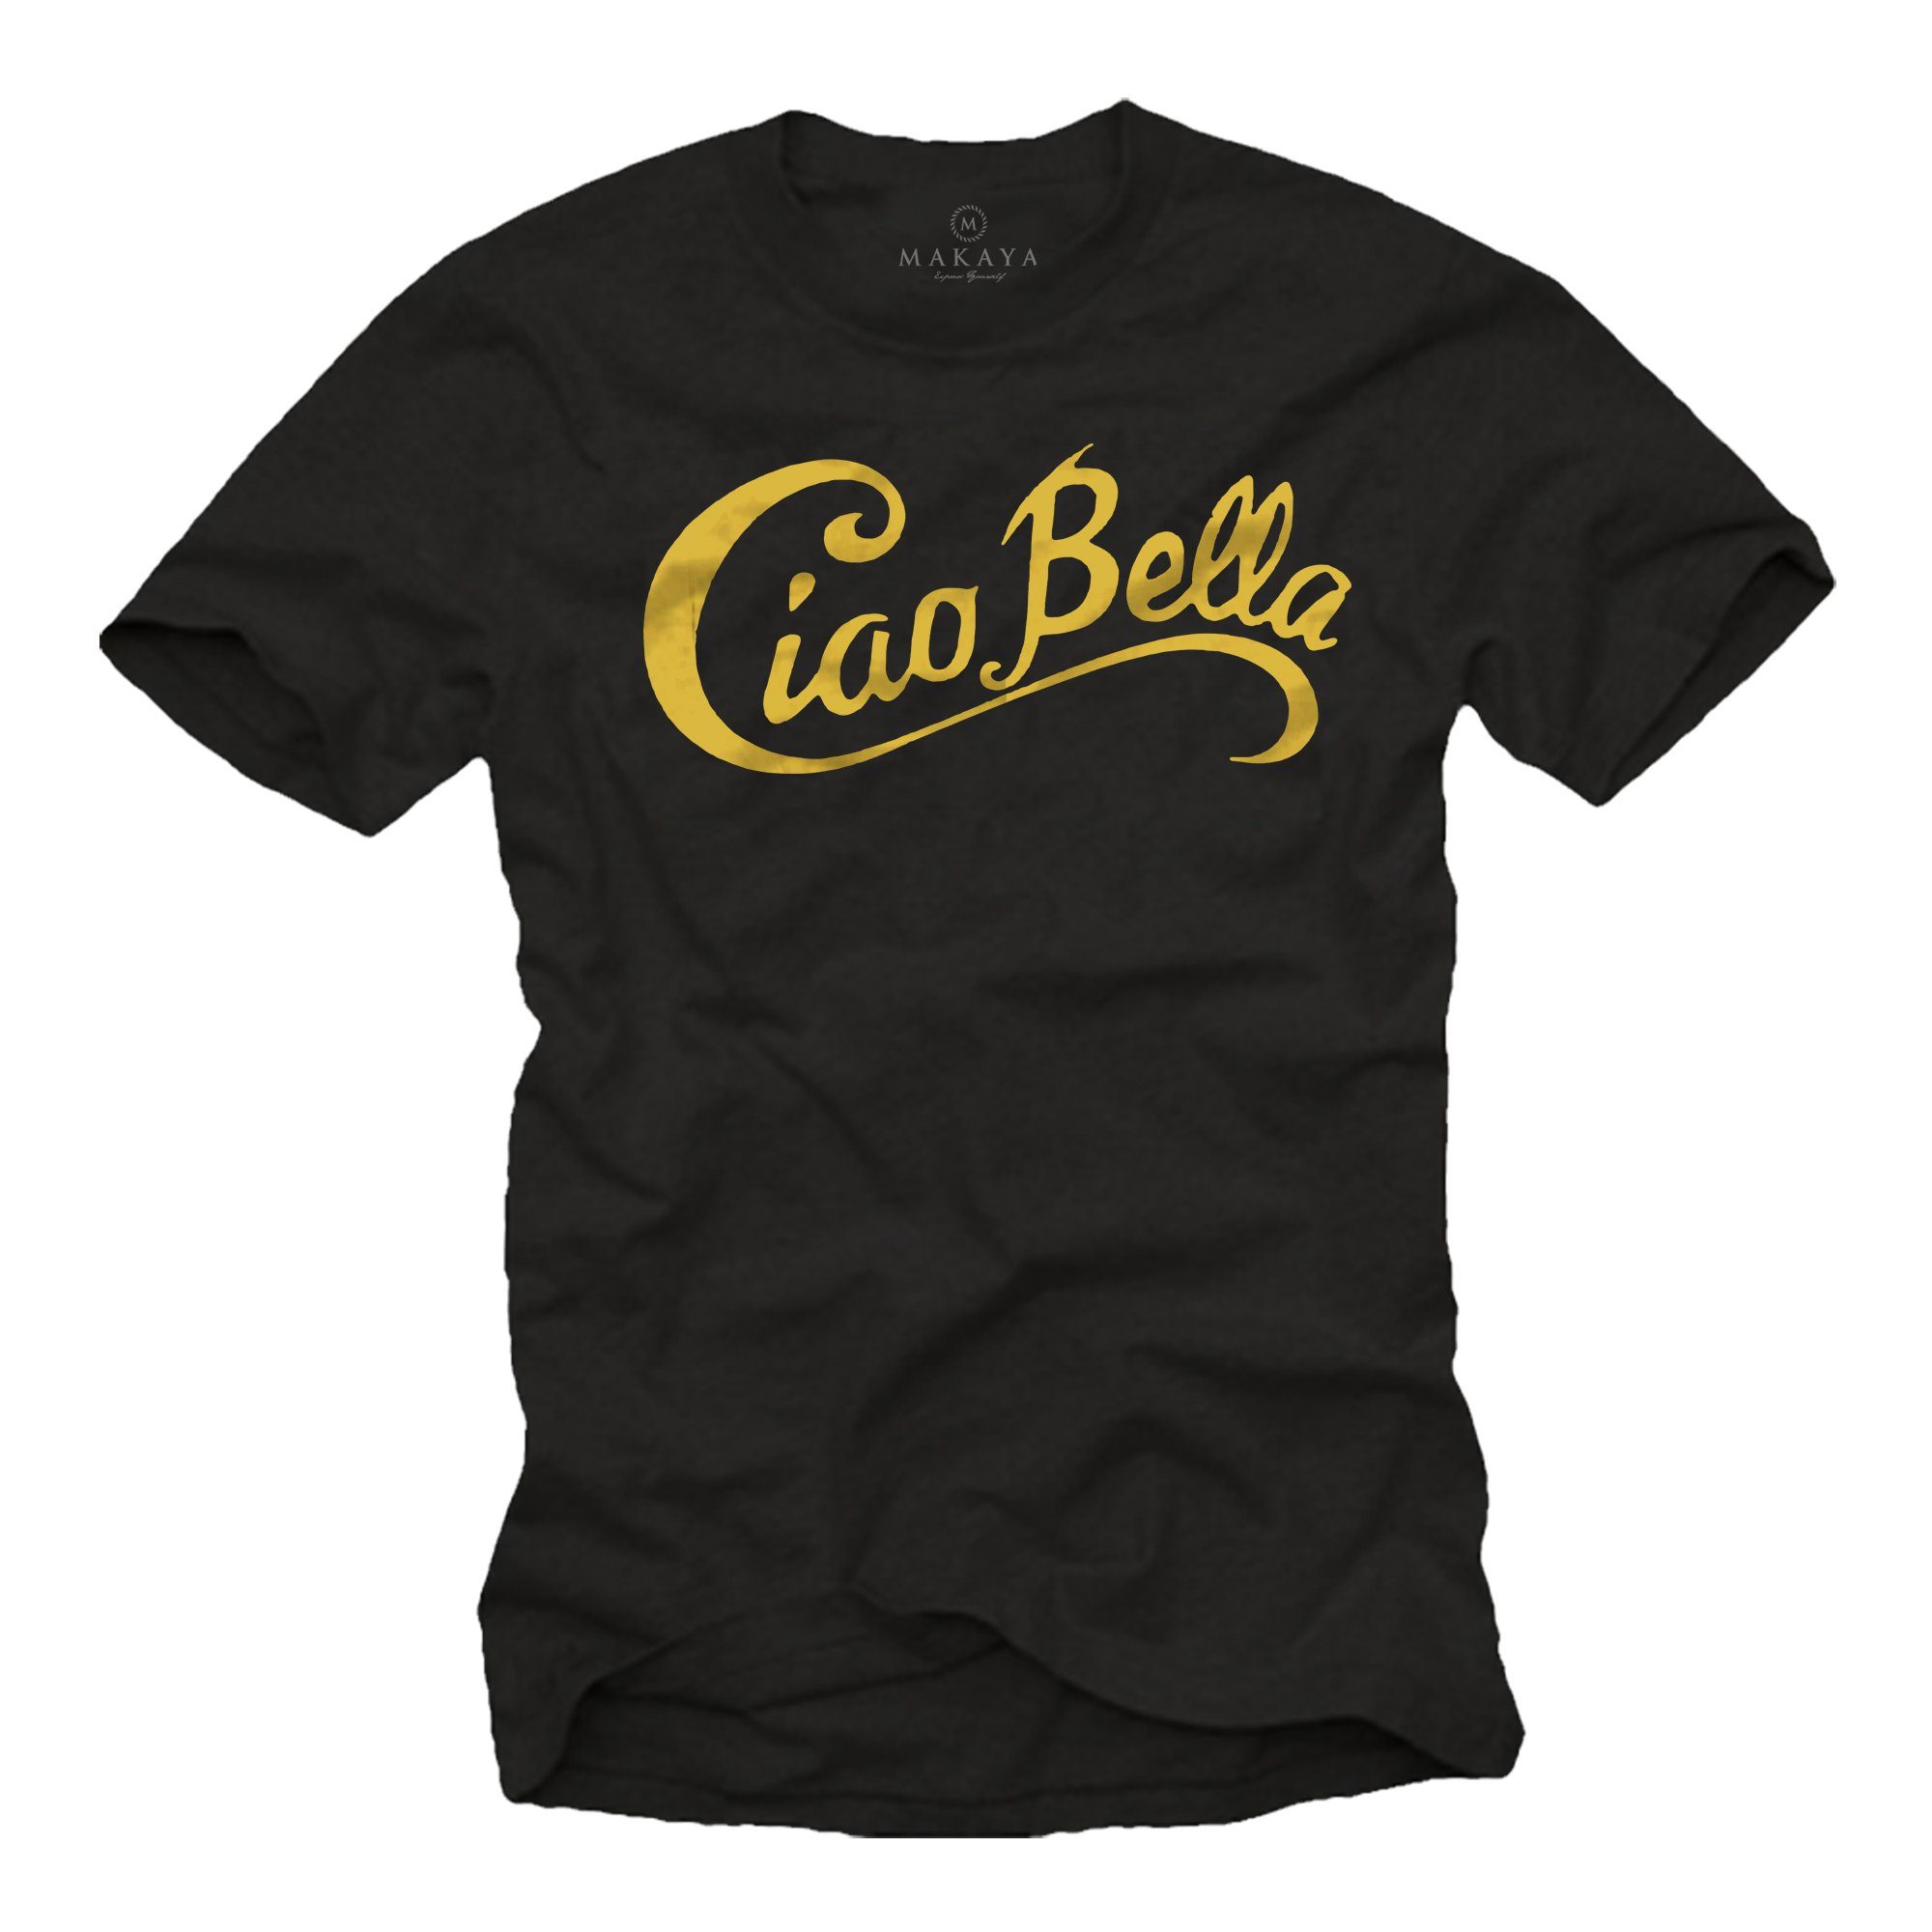 MAKAYA Print-Shirt Herren Italienischer Spruch Ciao Bella Coole Mode Italien Style Logo, Motiv Schwarz